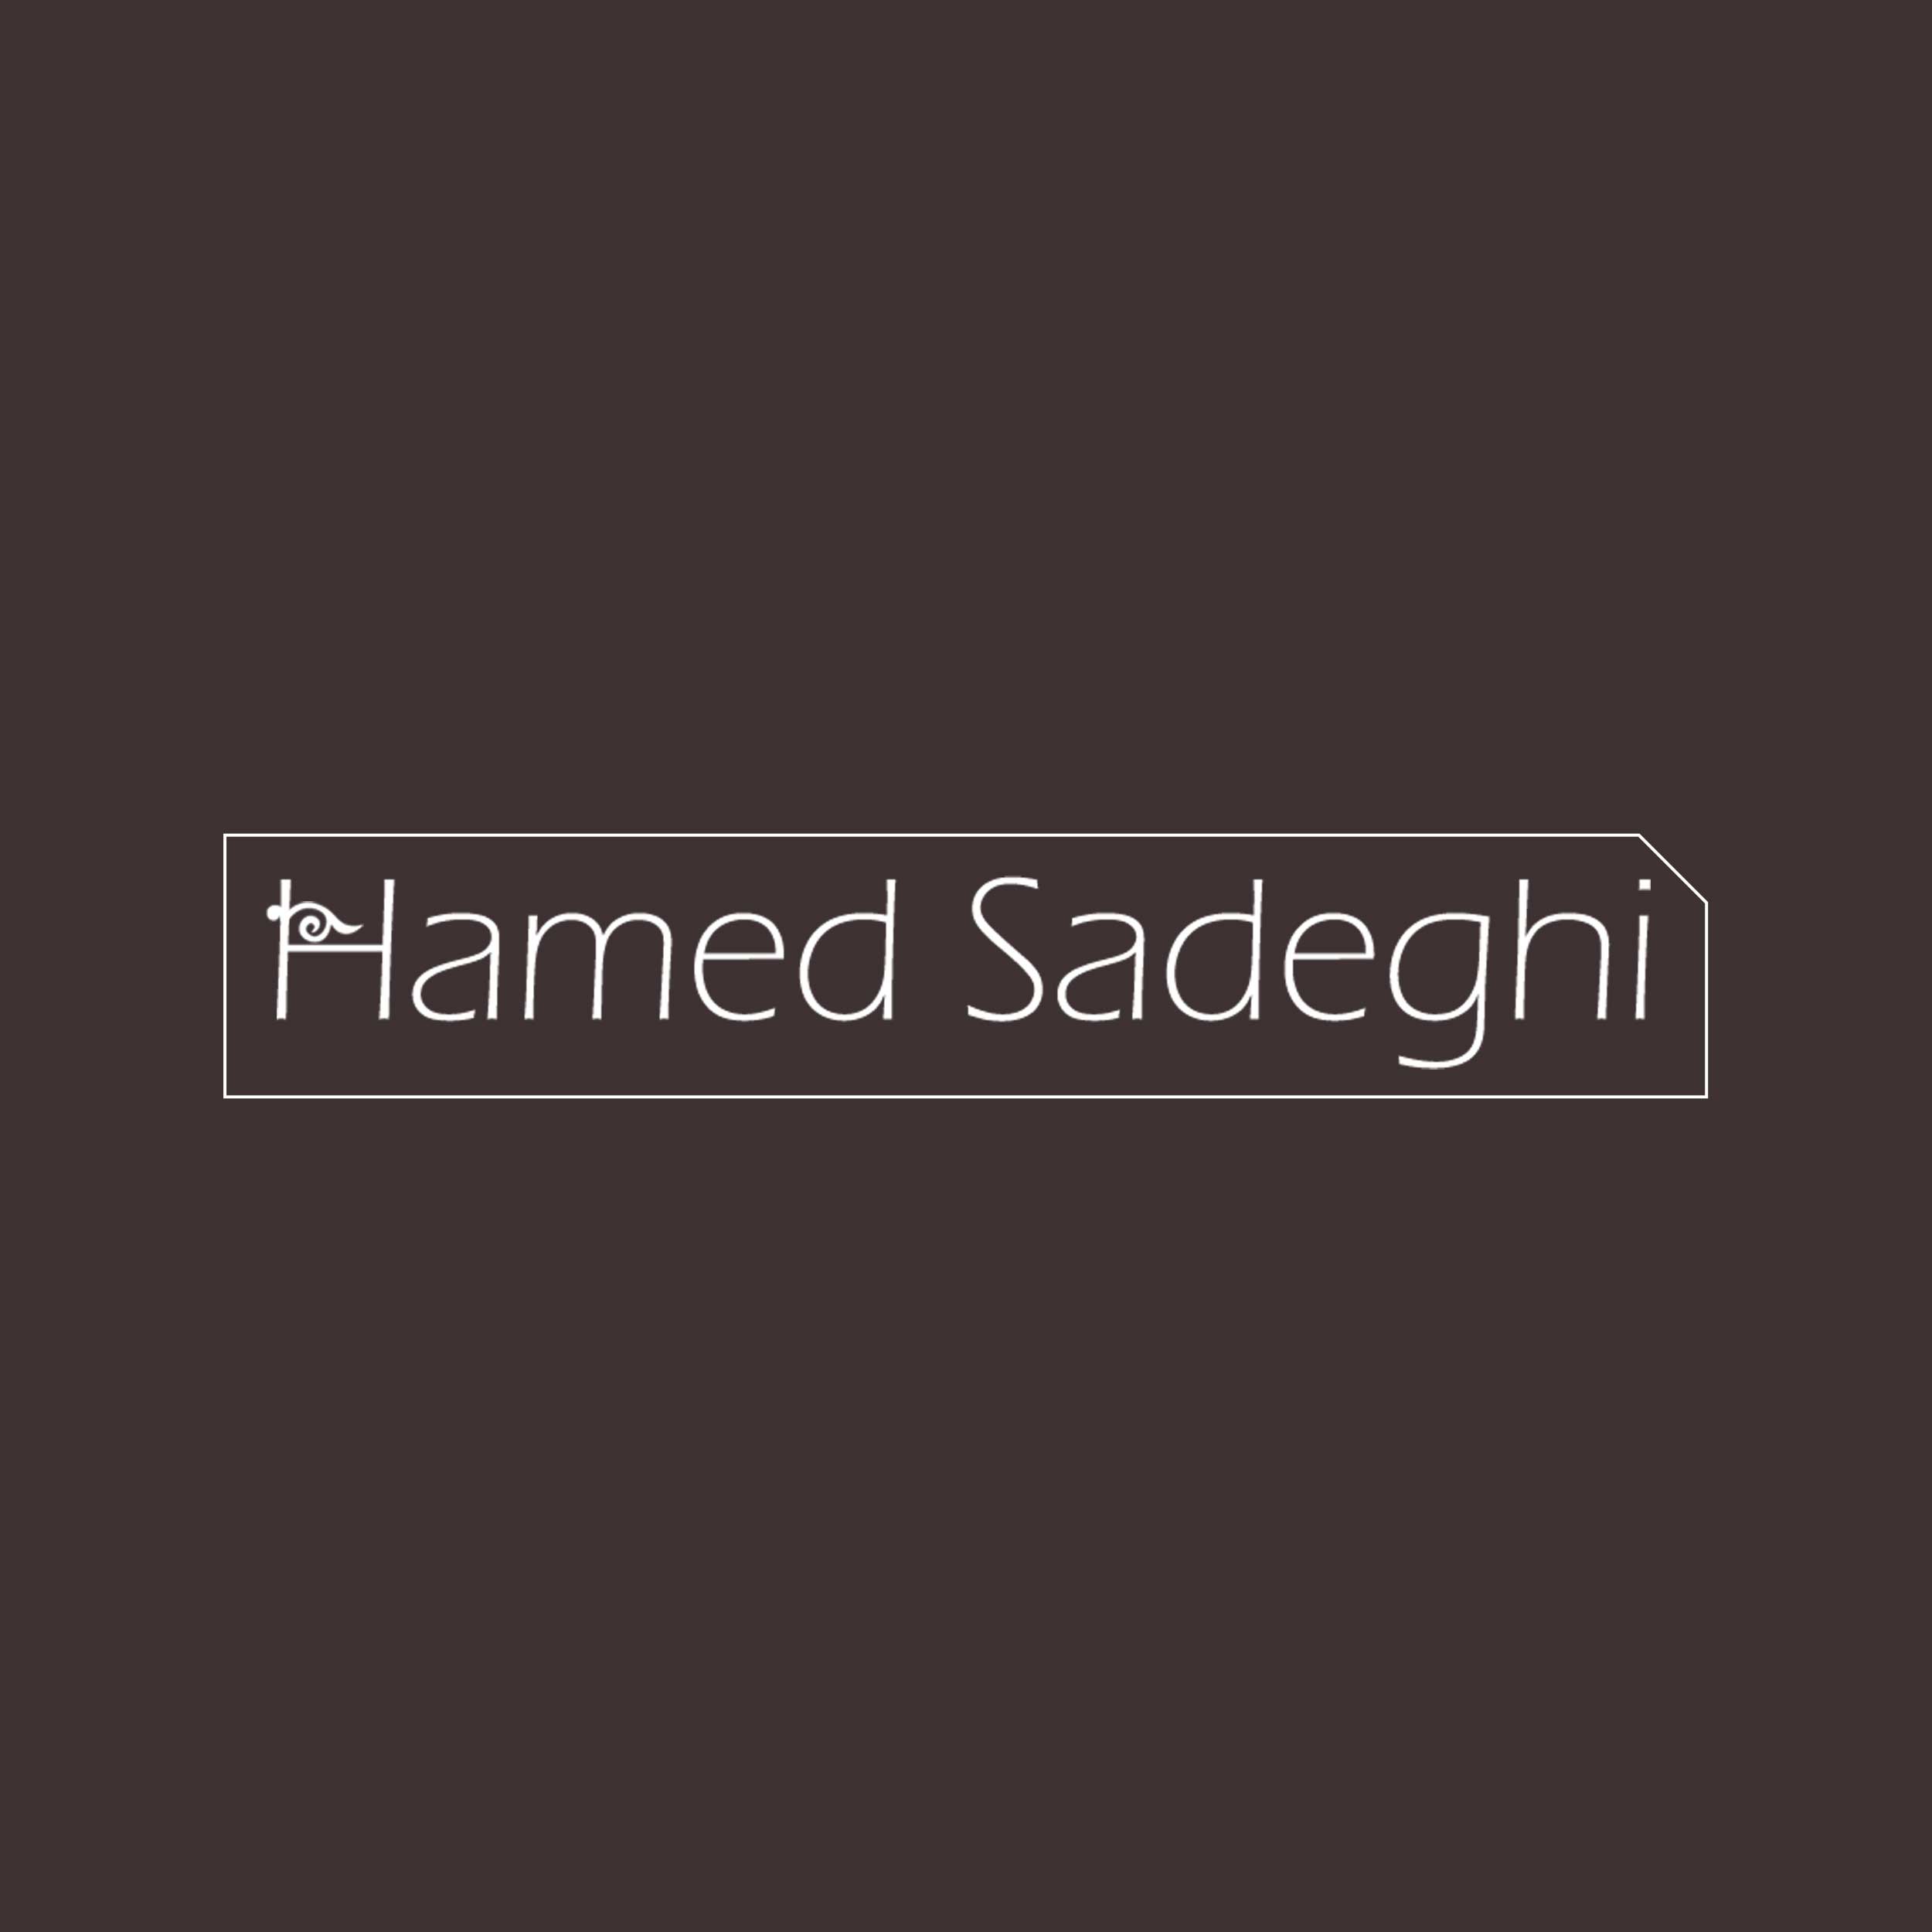 Hamed Sadeghi